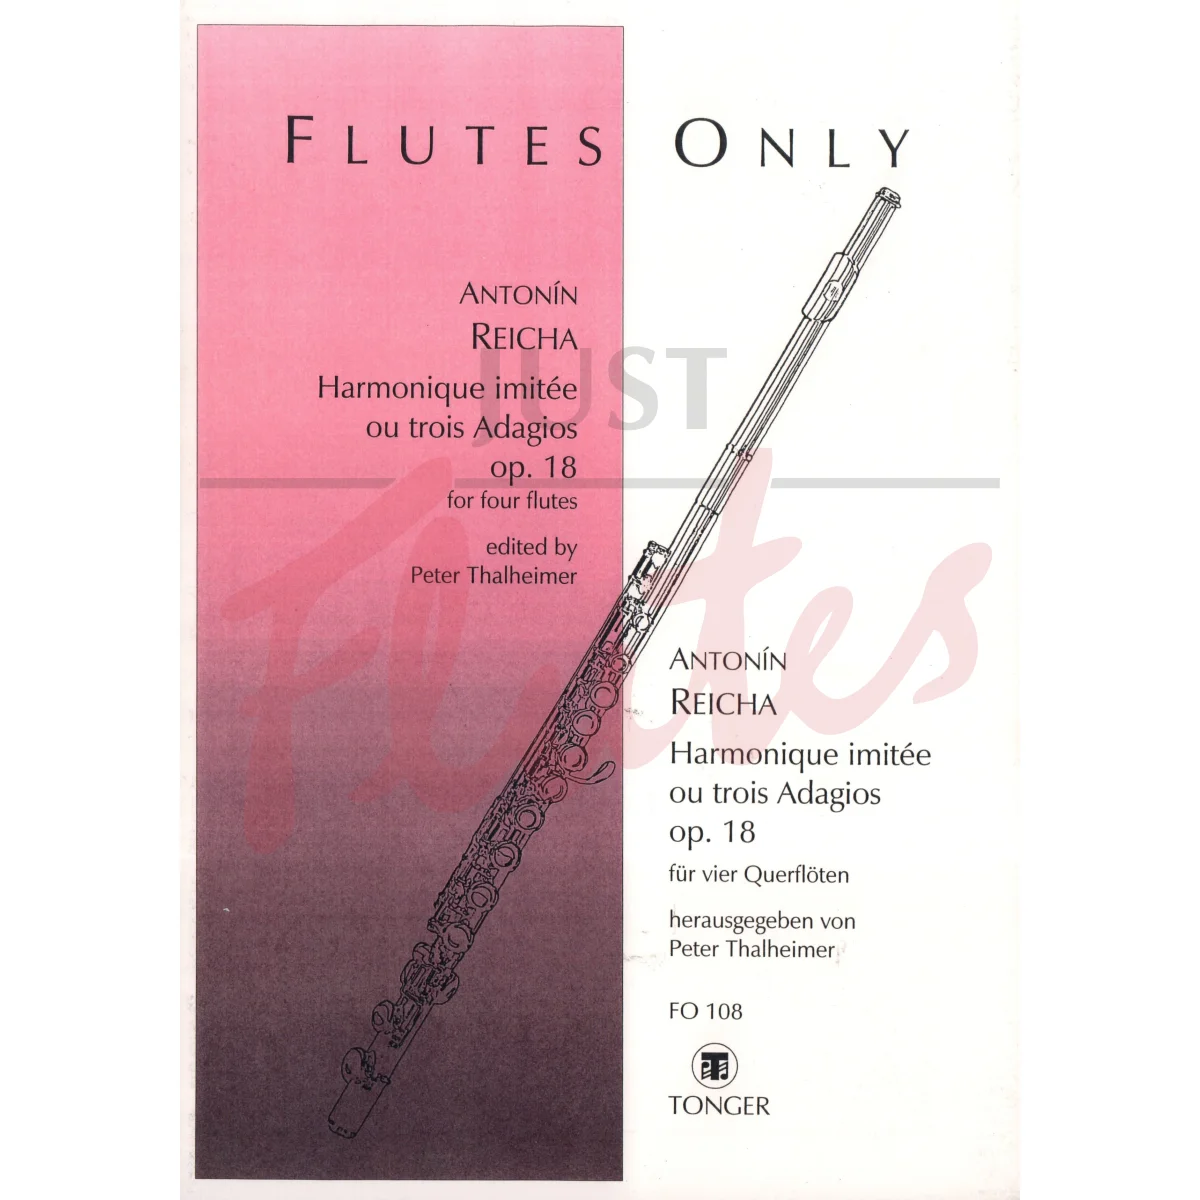 Harmonique Imitée ou trois Adagios for Four Flutes